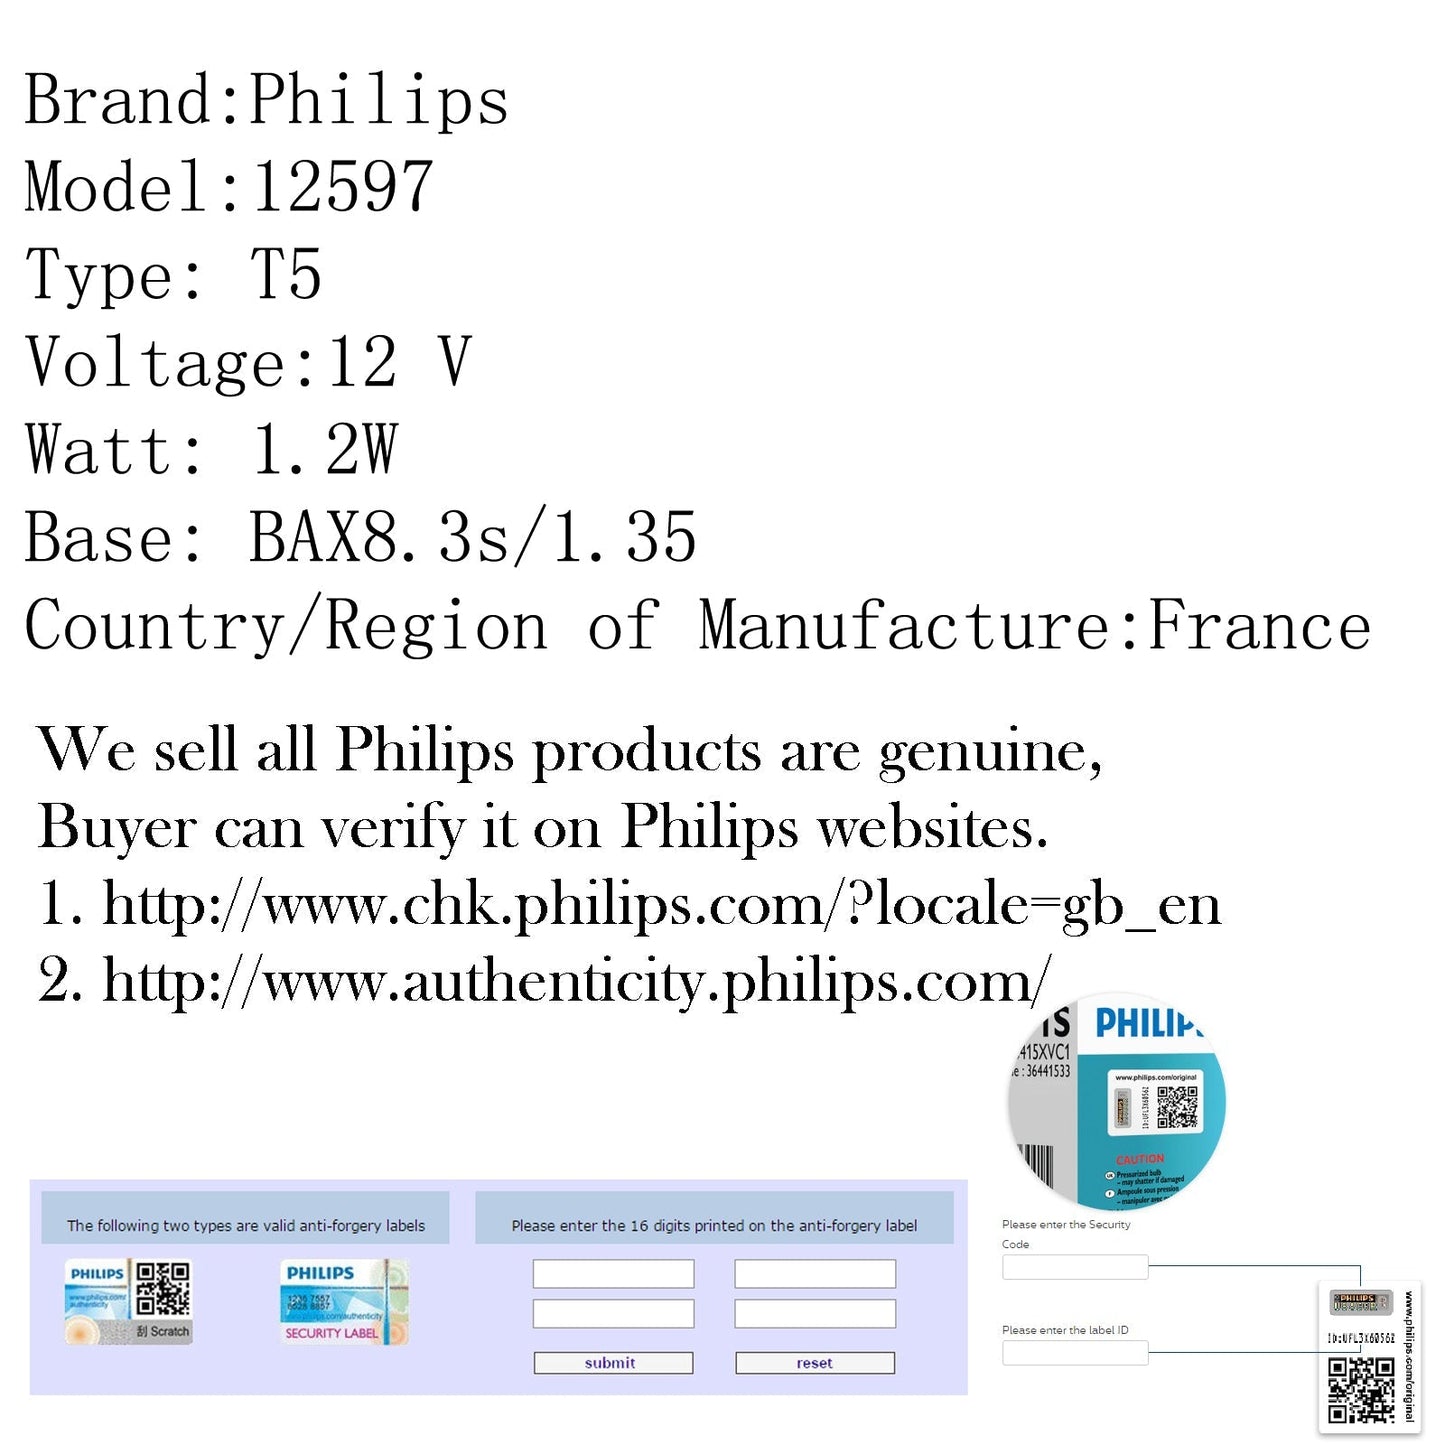 10pcs Genuine PHILIPS 12597 T5 12V 1.2W BAX8.3s/1.35 Lampada di Segnalazione Premium Lampadina Generica